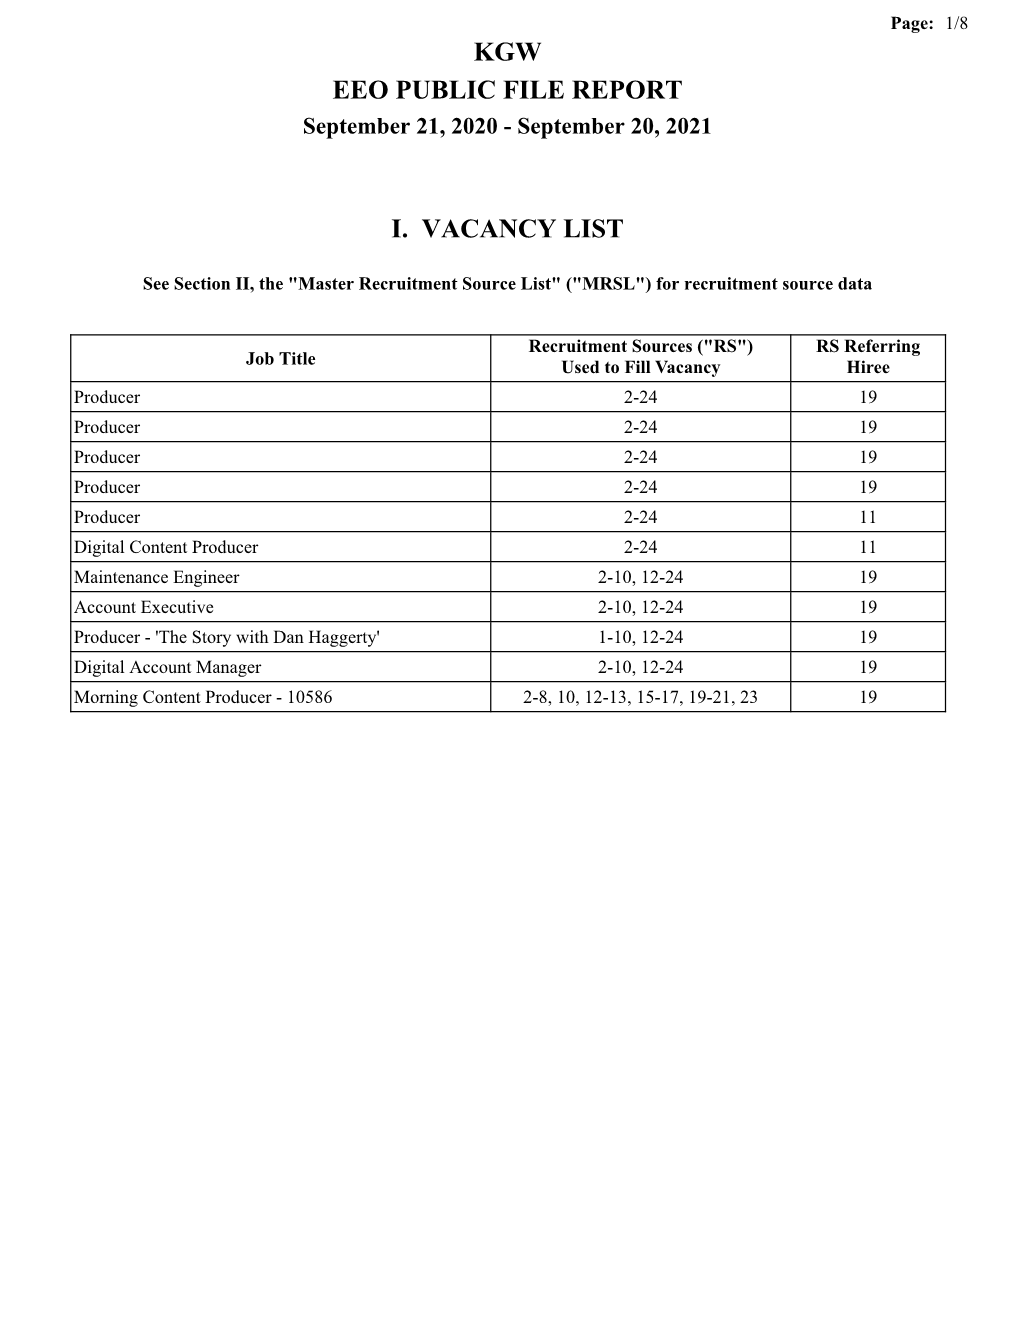 Kgw Eeo Public File Report I. Vacancy List